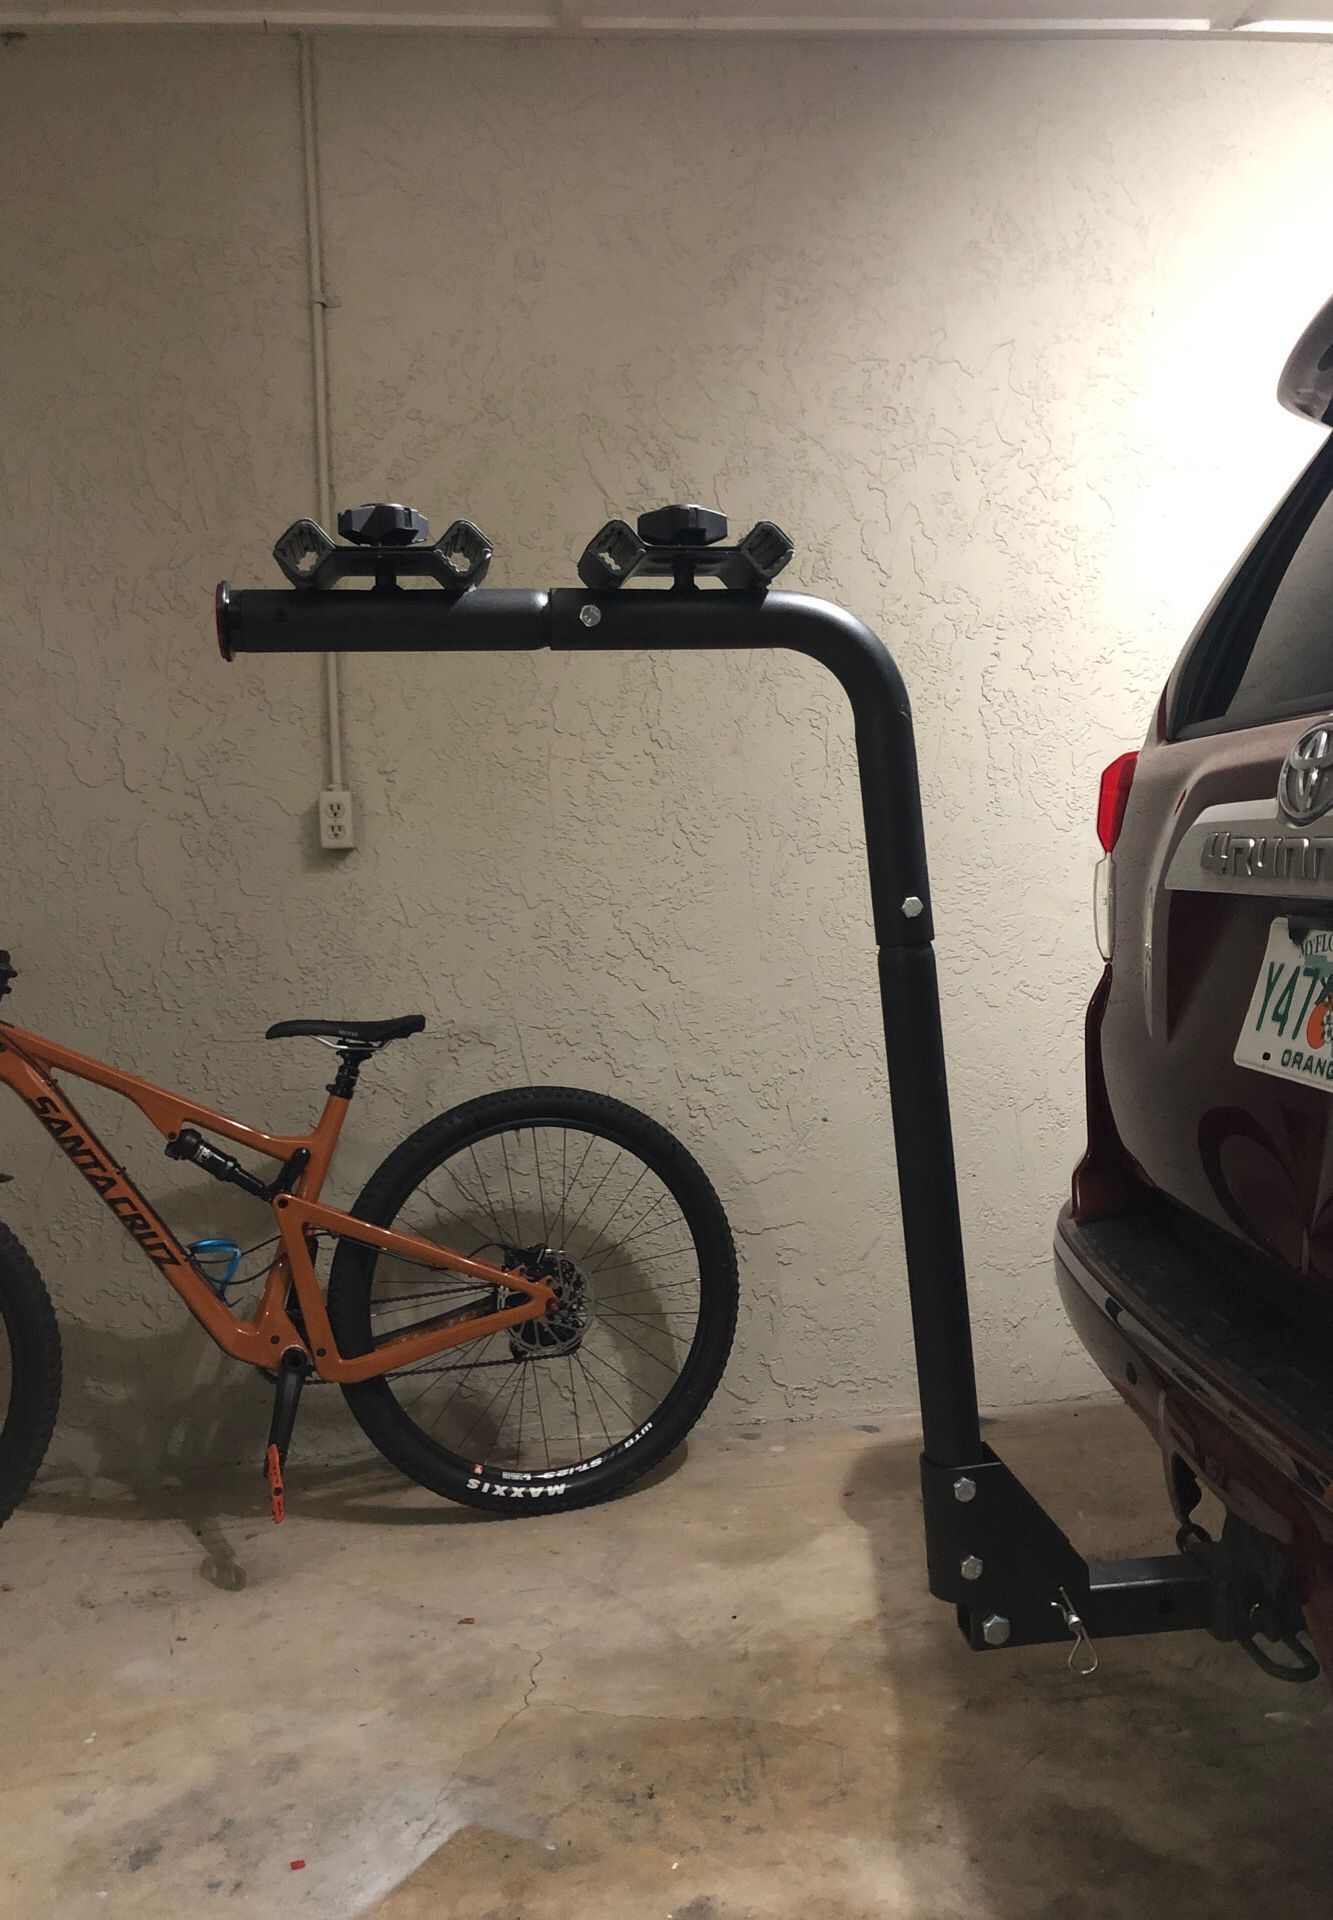 Brand new cargo lock bike rack